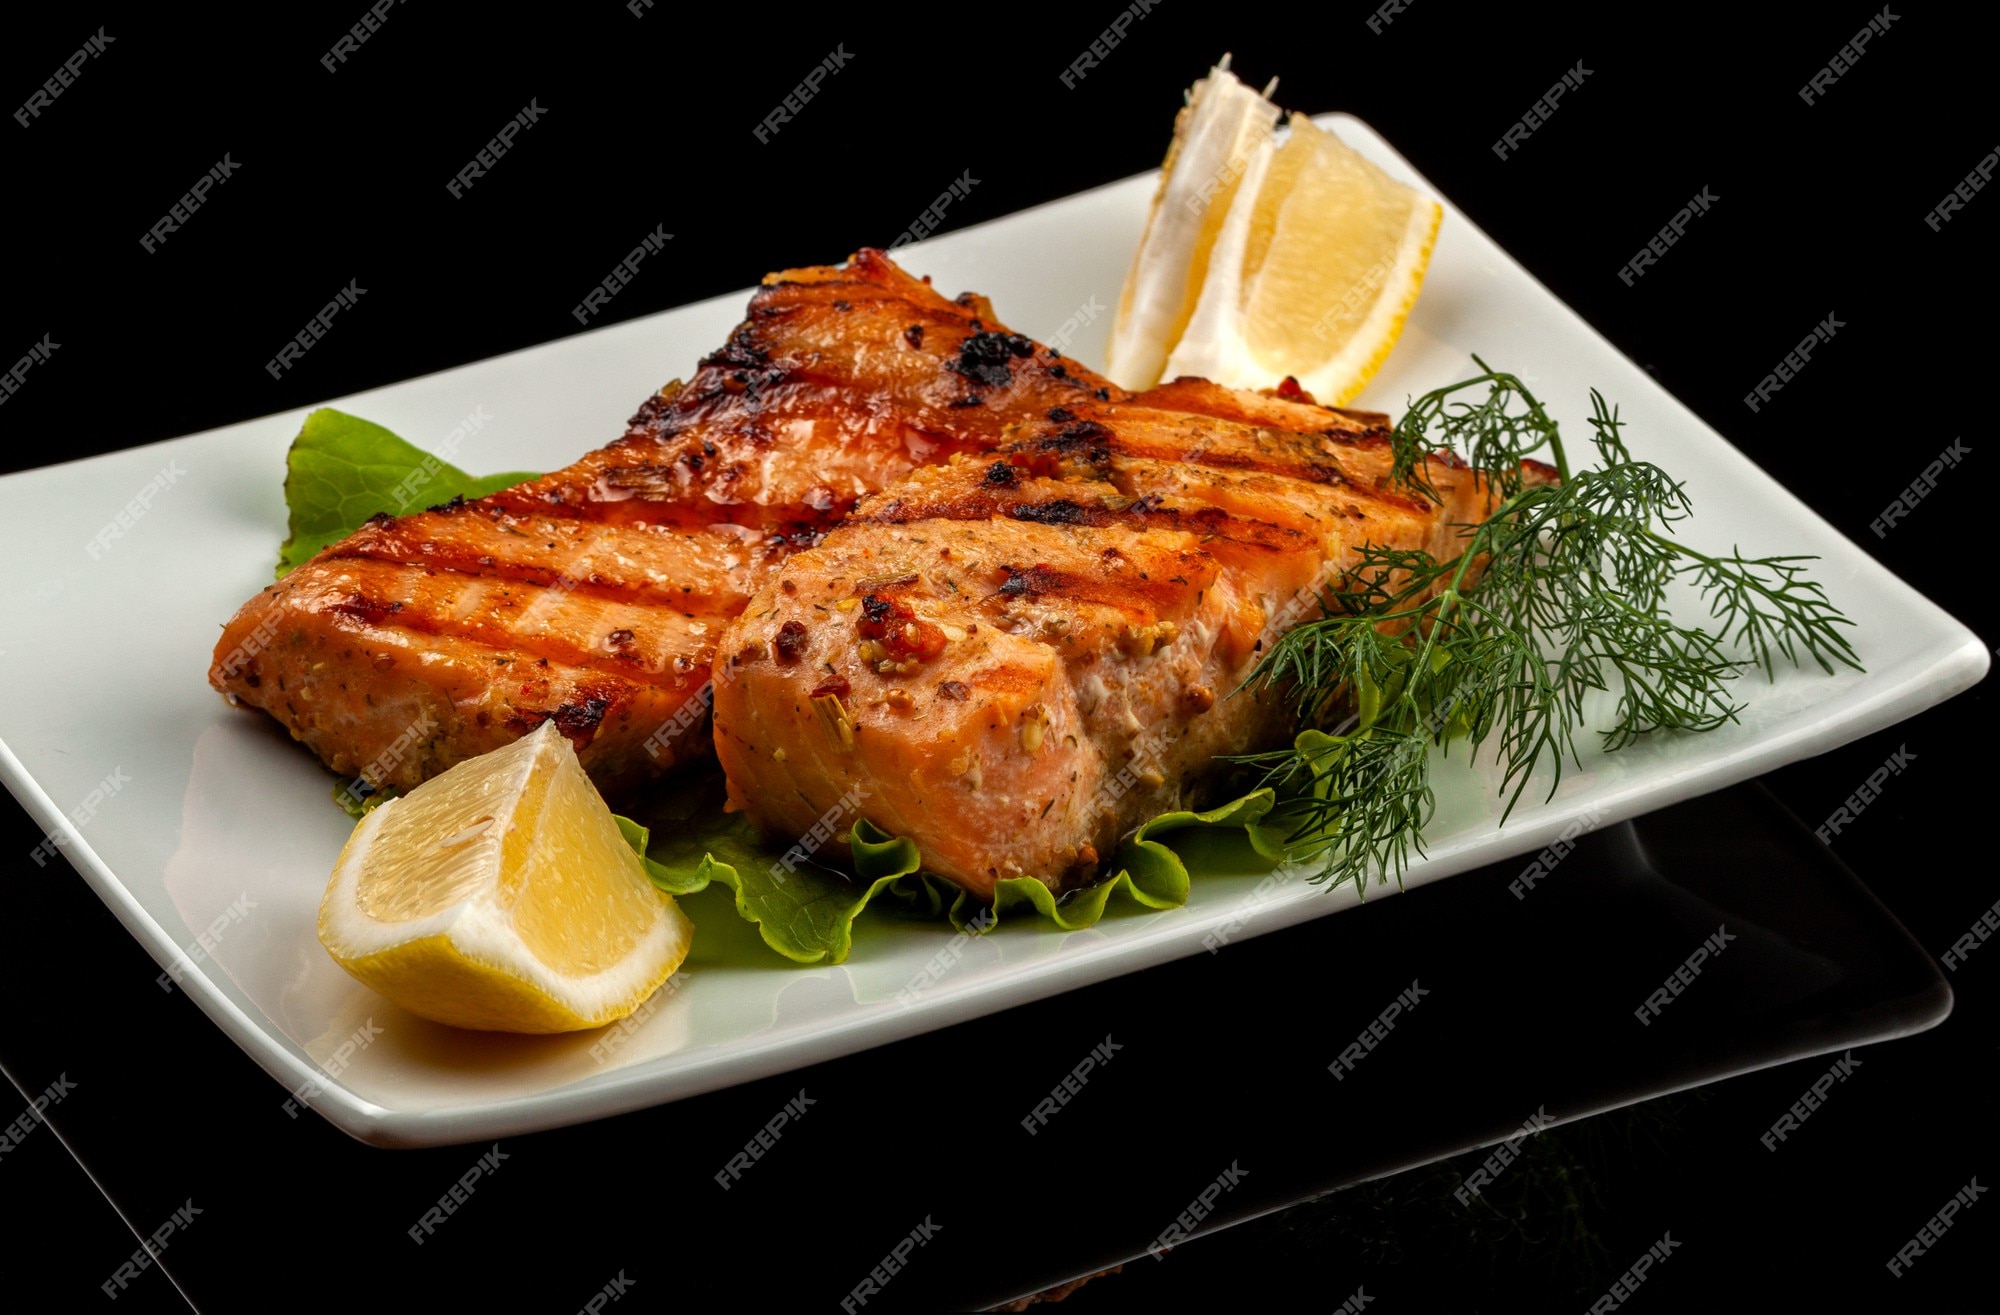 https://img.freepik.com/premium-photo/fish-trout-chum-salmon-humpback-piece-baked-grilled-with-slice-lemon-lettuce_159285-517.jpg?w=2000